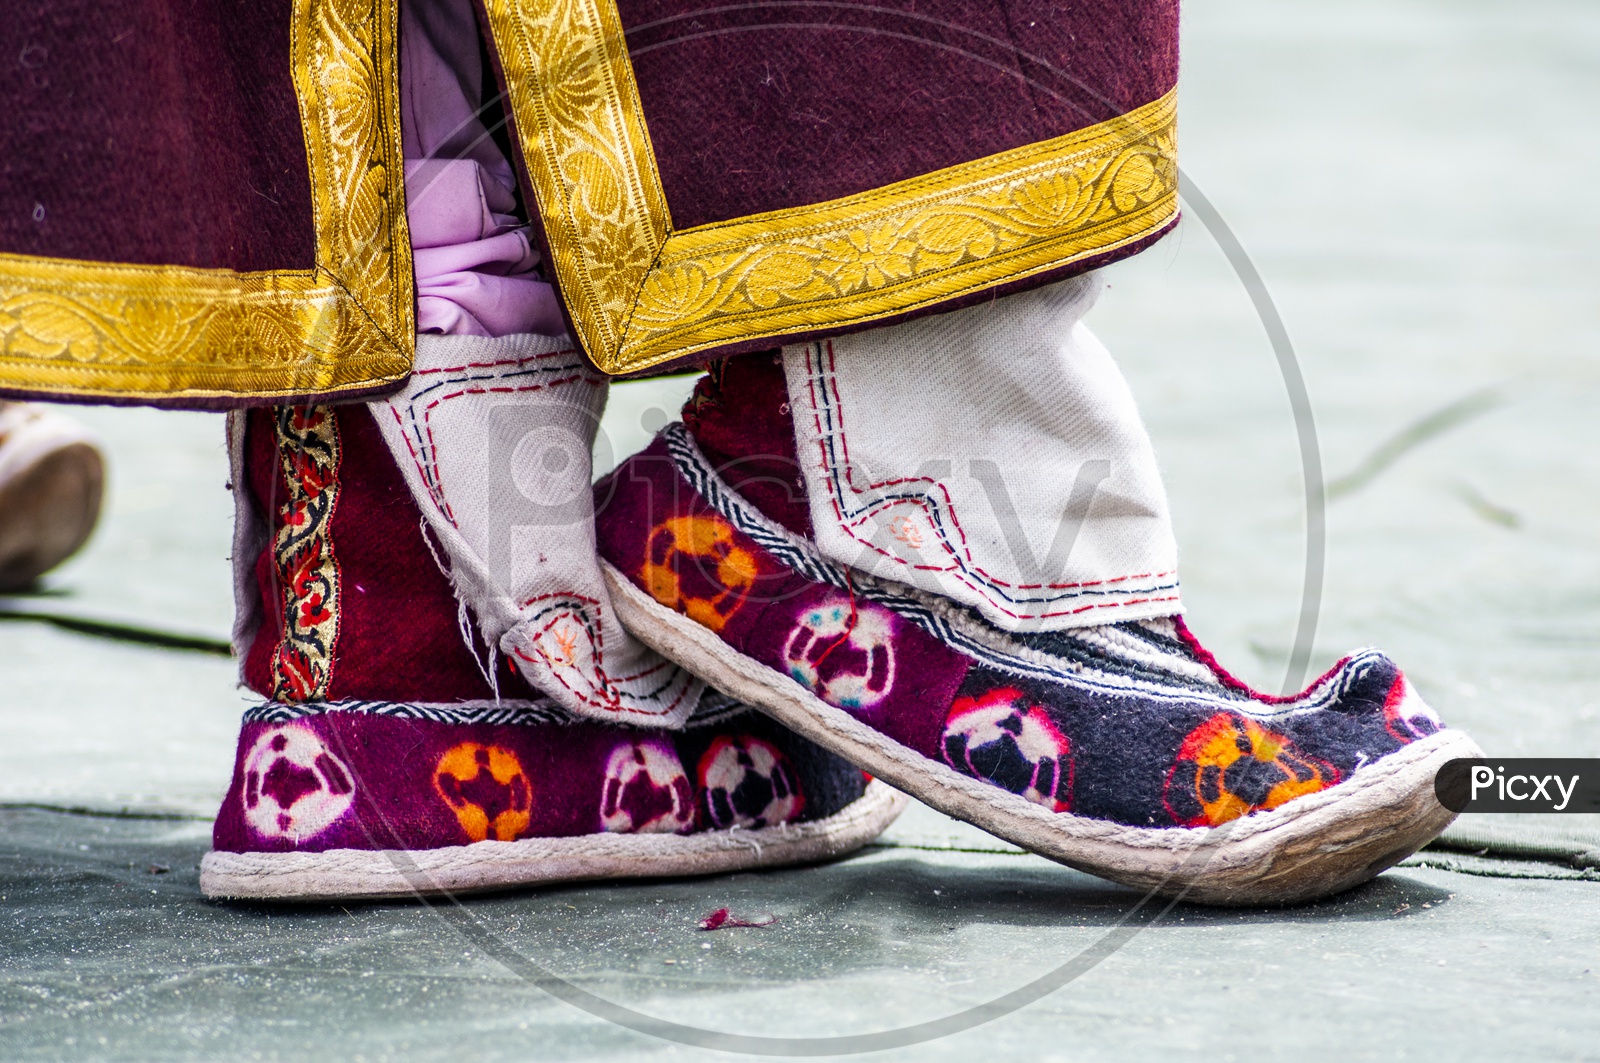 Shoes in Ladakh Festival, Leh